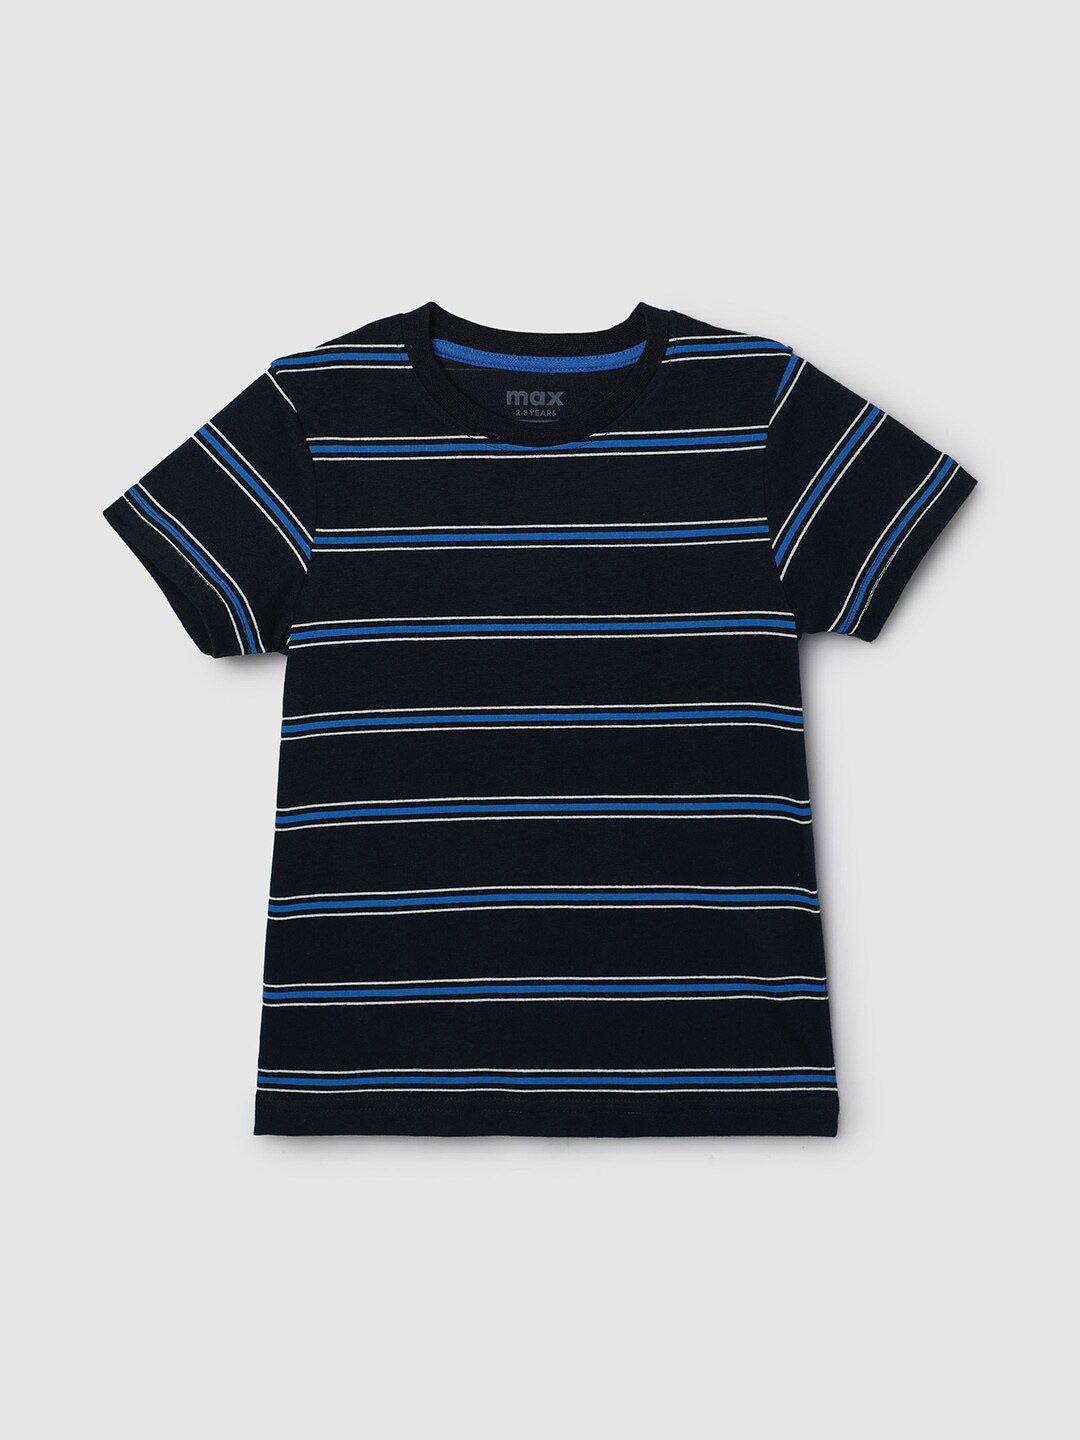 max boys striped printed pure cotton t-shirt